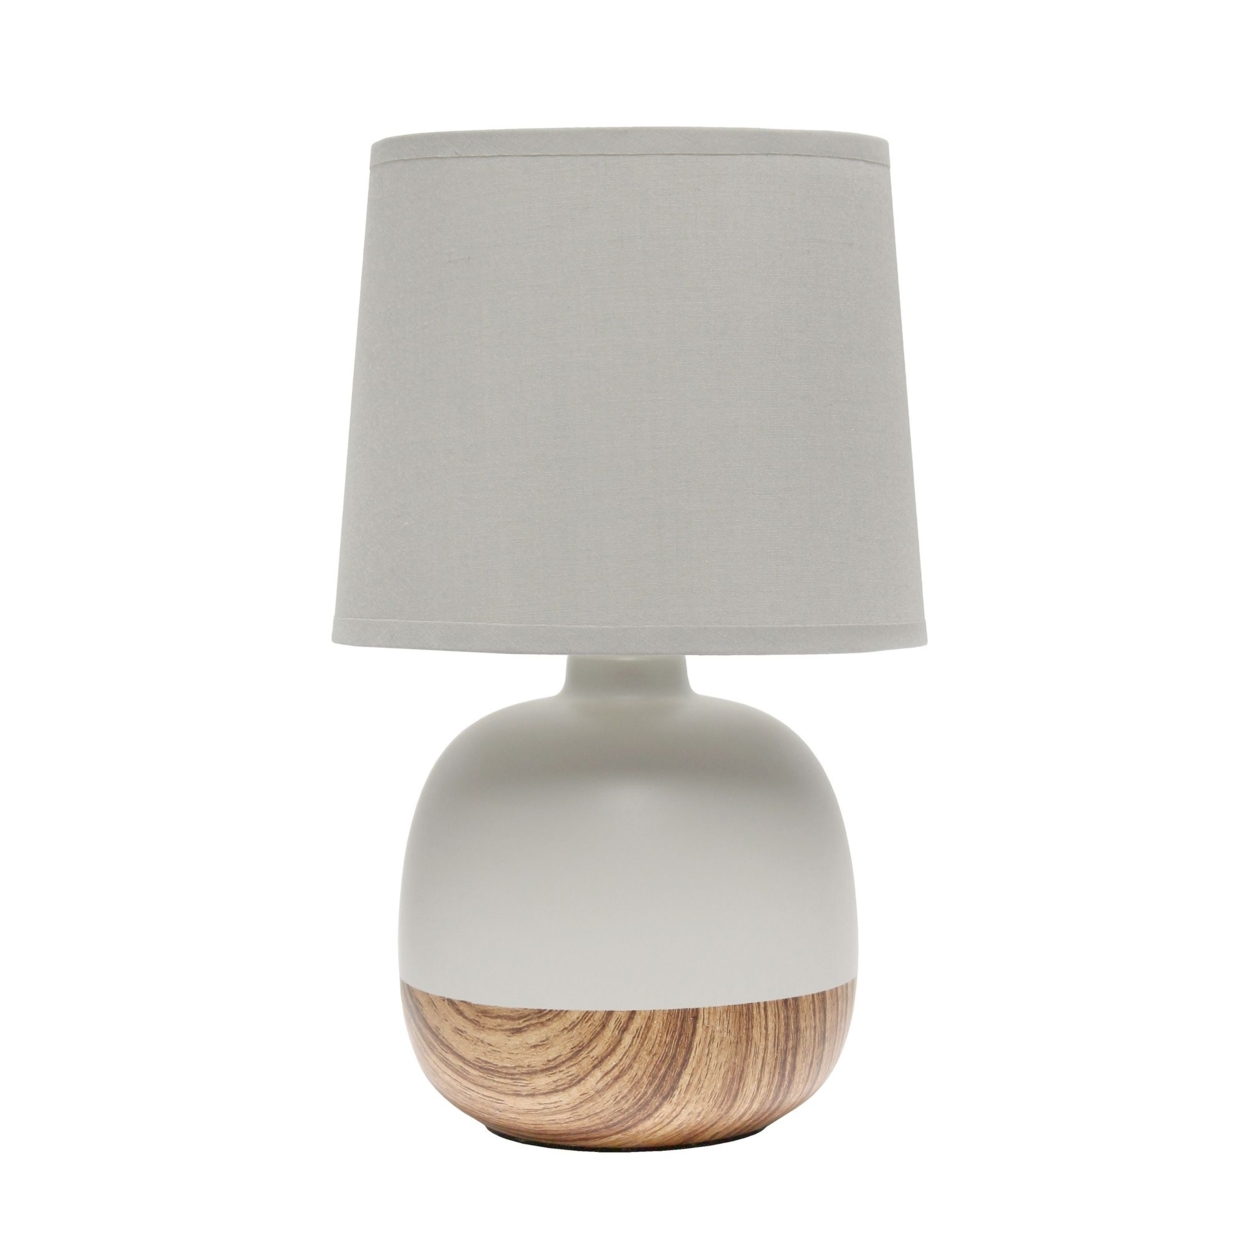 Simple Designs Petite Mid Century Table Lamp, Light Wood and Light Gray